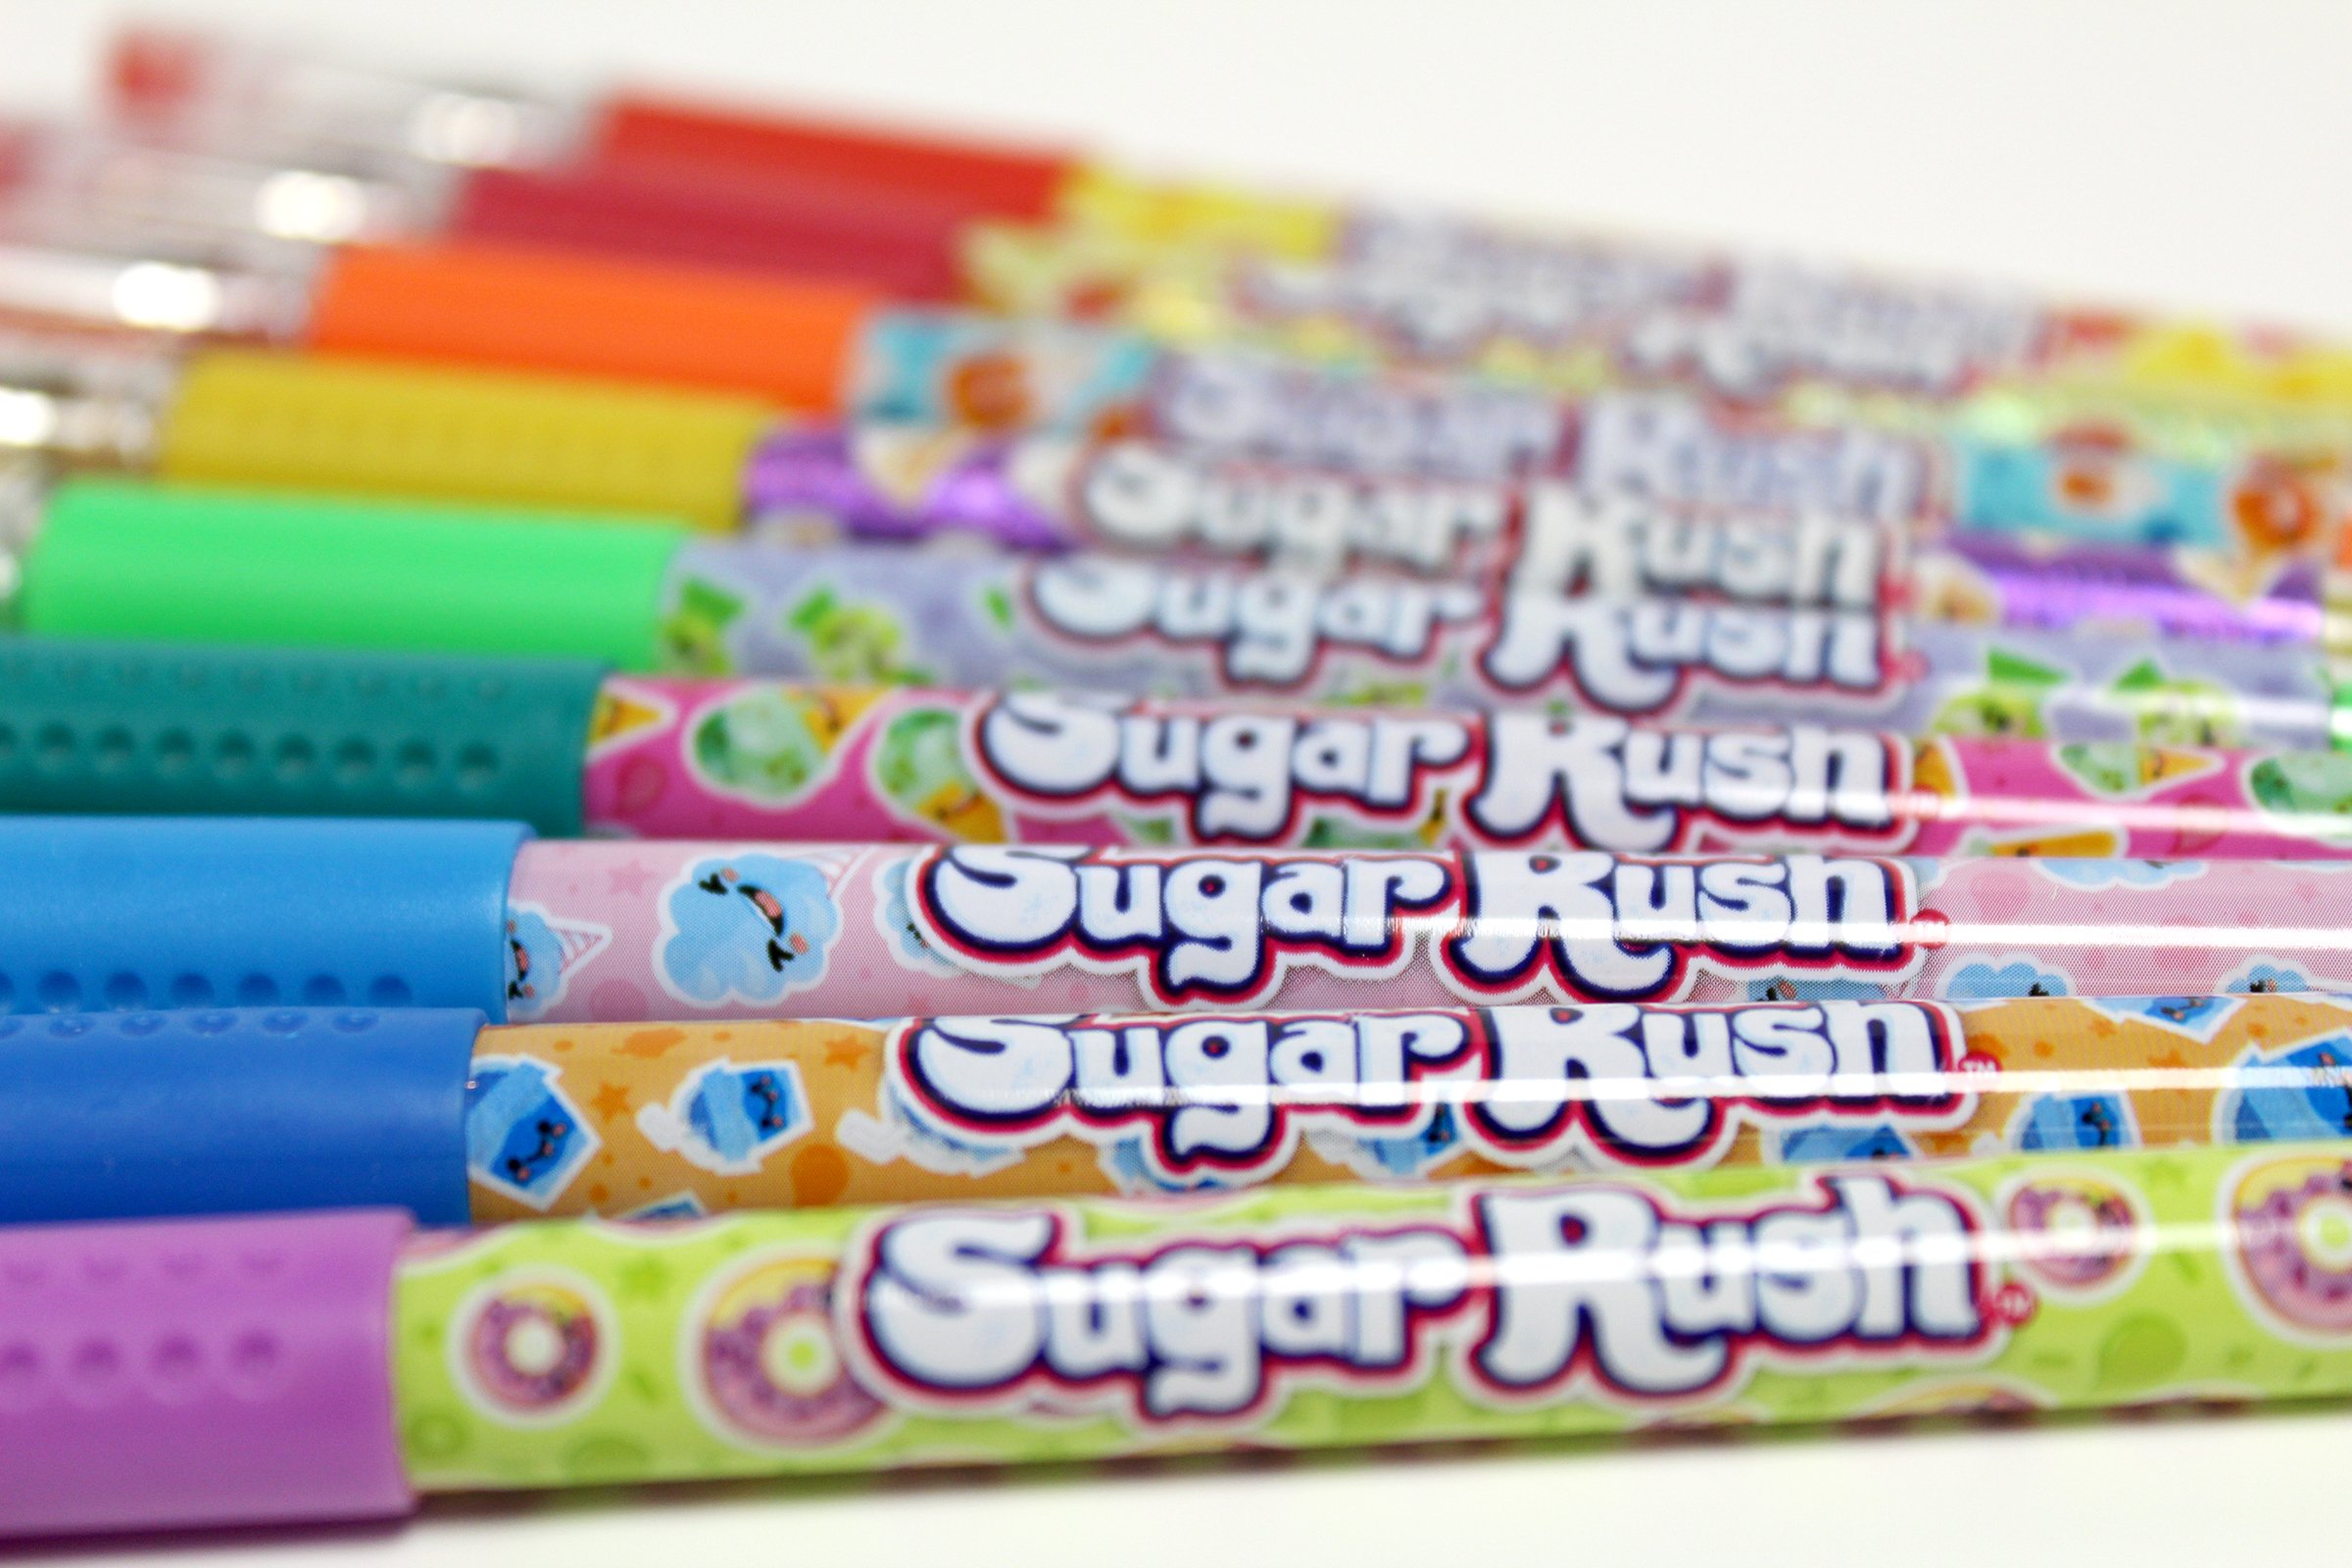 Scentos on X: A sweet treat to start off the week: New Sugar Rush gel  pens! #scentos #gelpens #sugarrush  / X